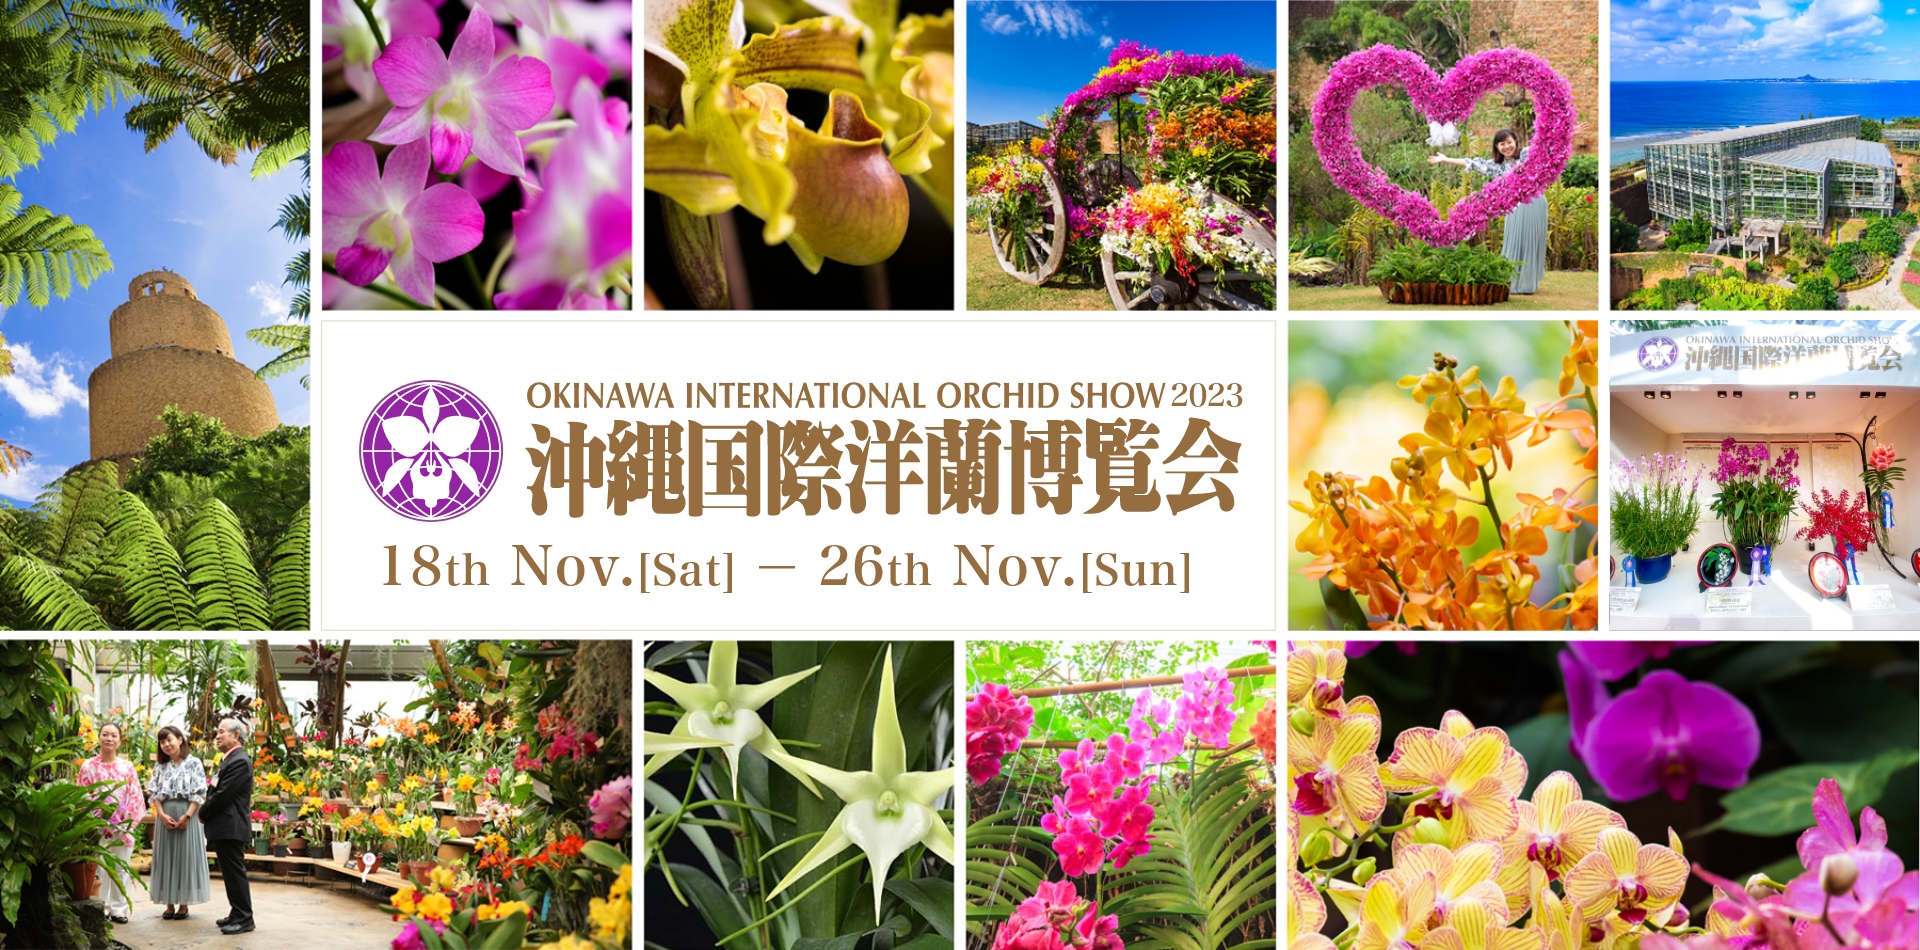 OKINAWA INTERNATIONAL ORCHID SHOW 2023